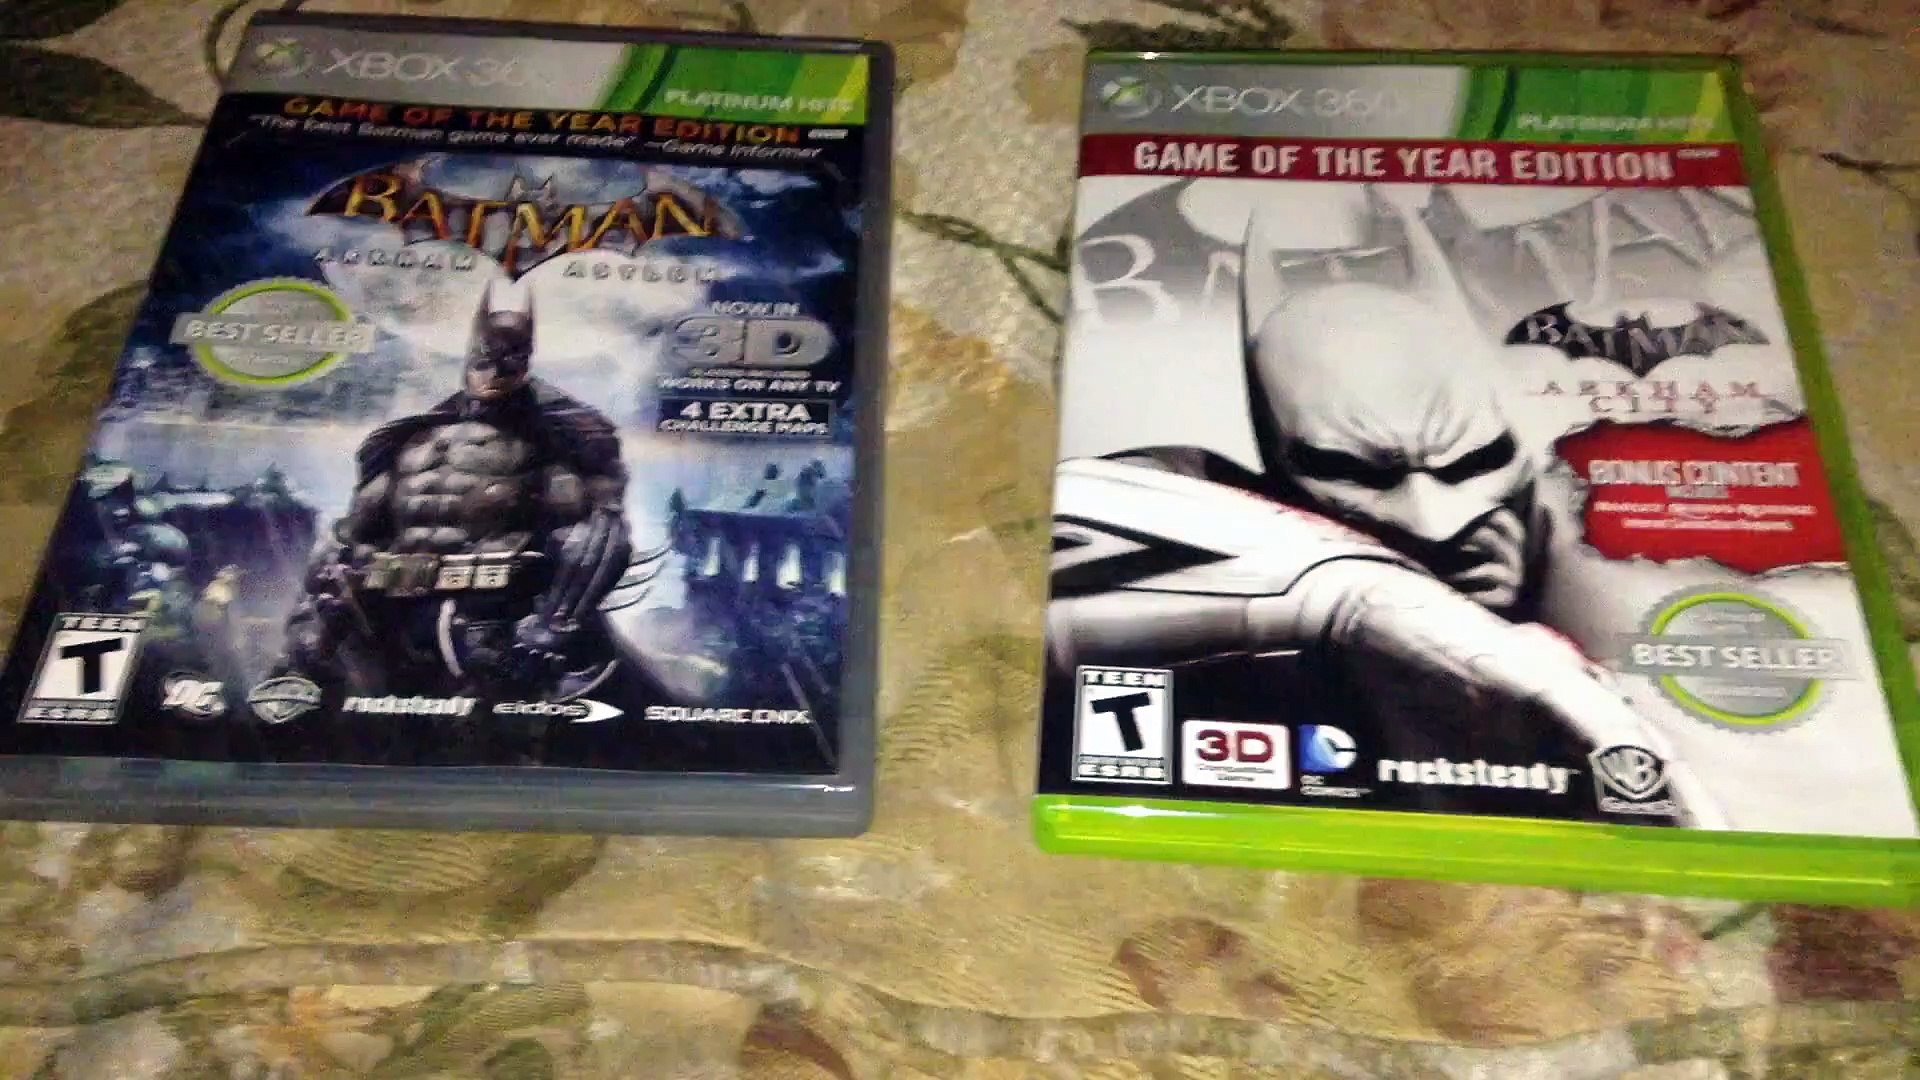 Batman Arkham Asylum Arkham City Xbox 360 Game Of The Year Editions Video Dailymotion